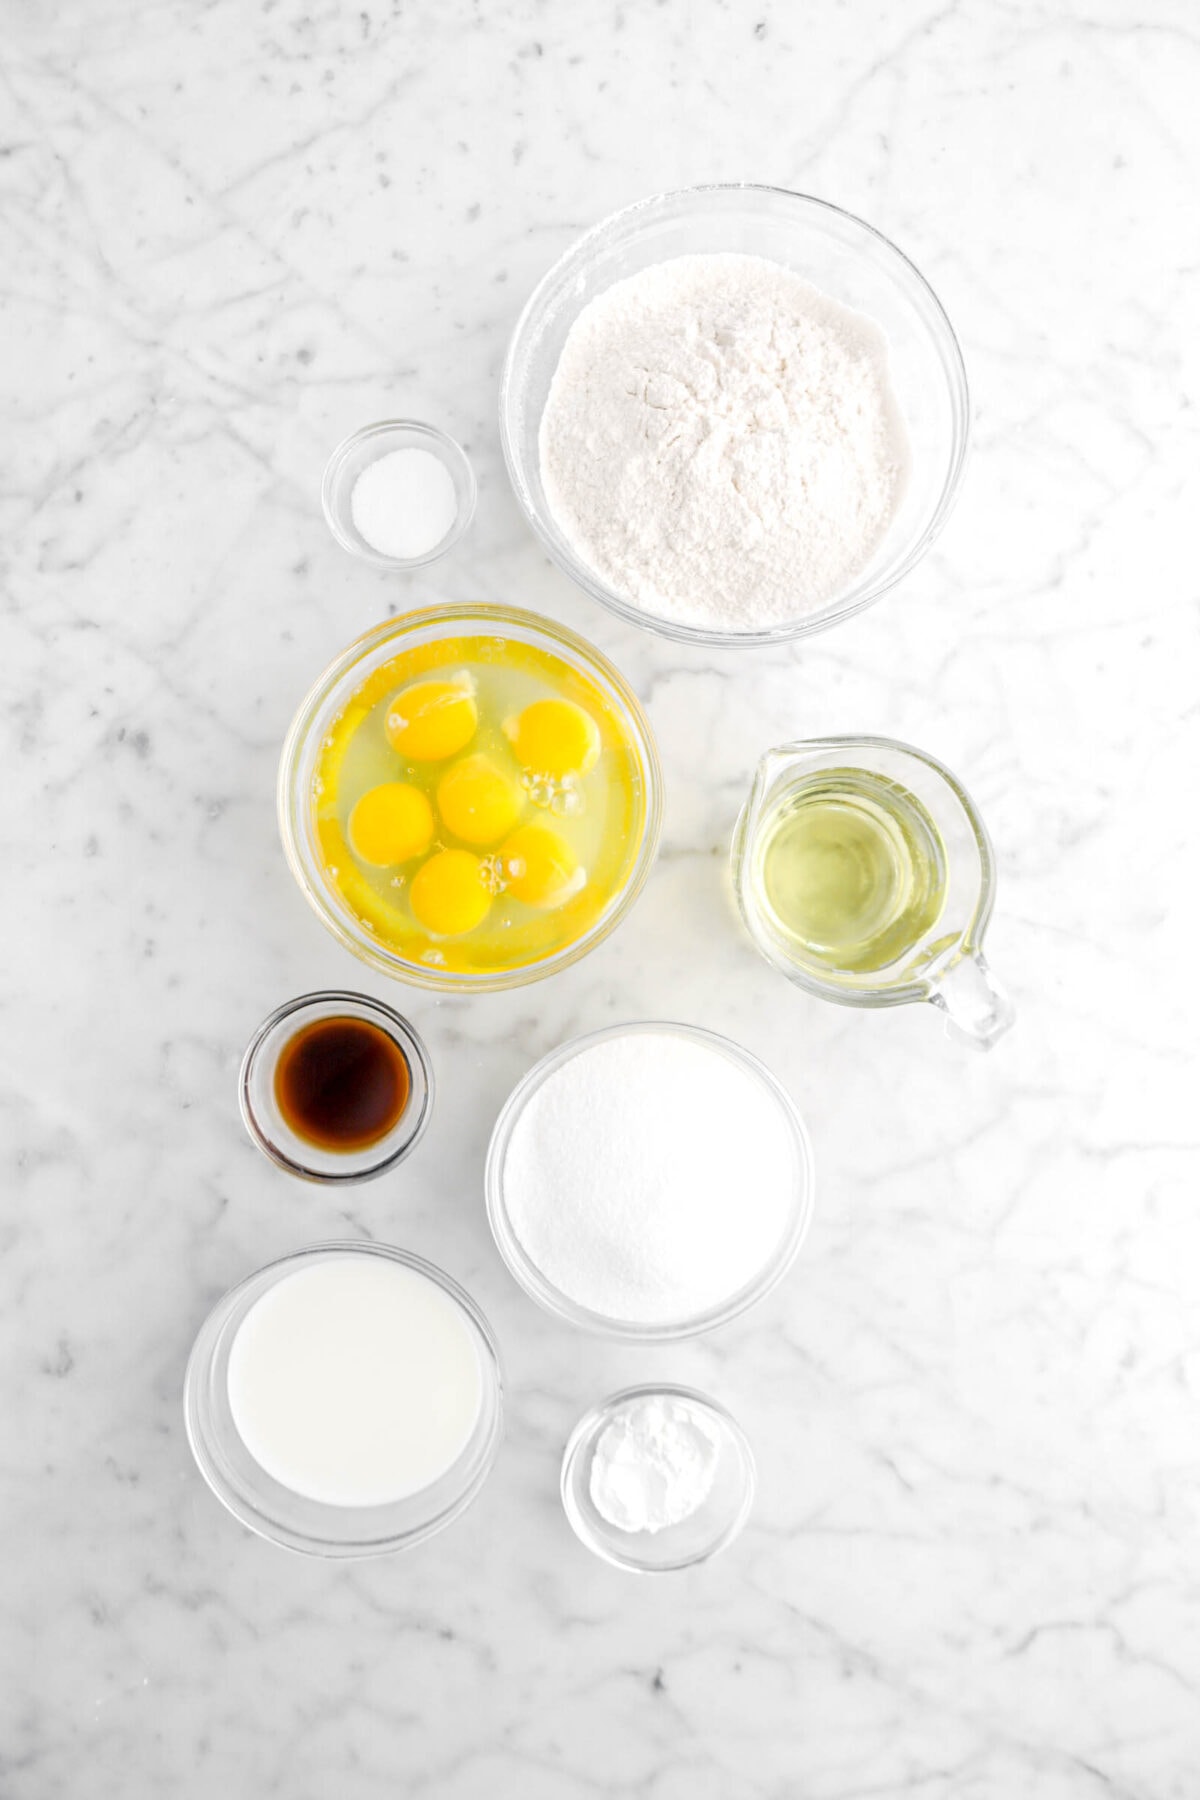 salt, flour, eggs, vegetable oil, vanilla, sugar, milk, and baking powder on marble surface